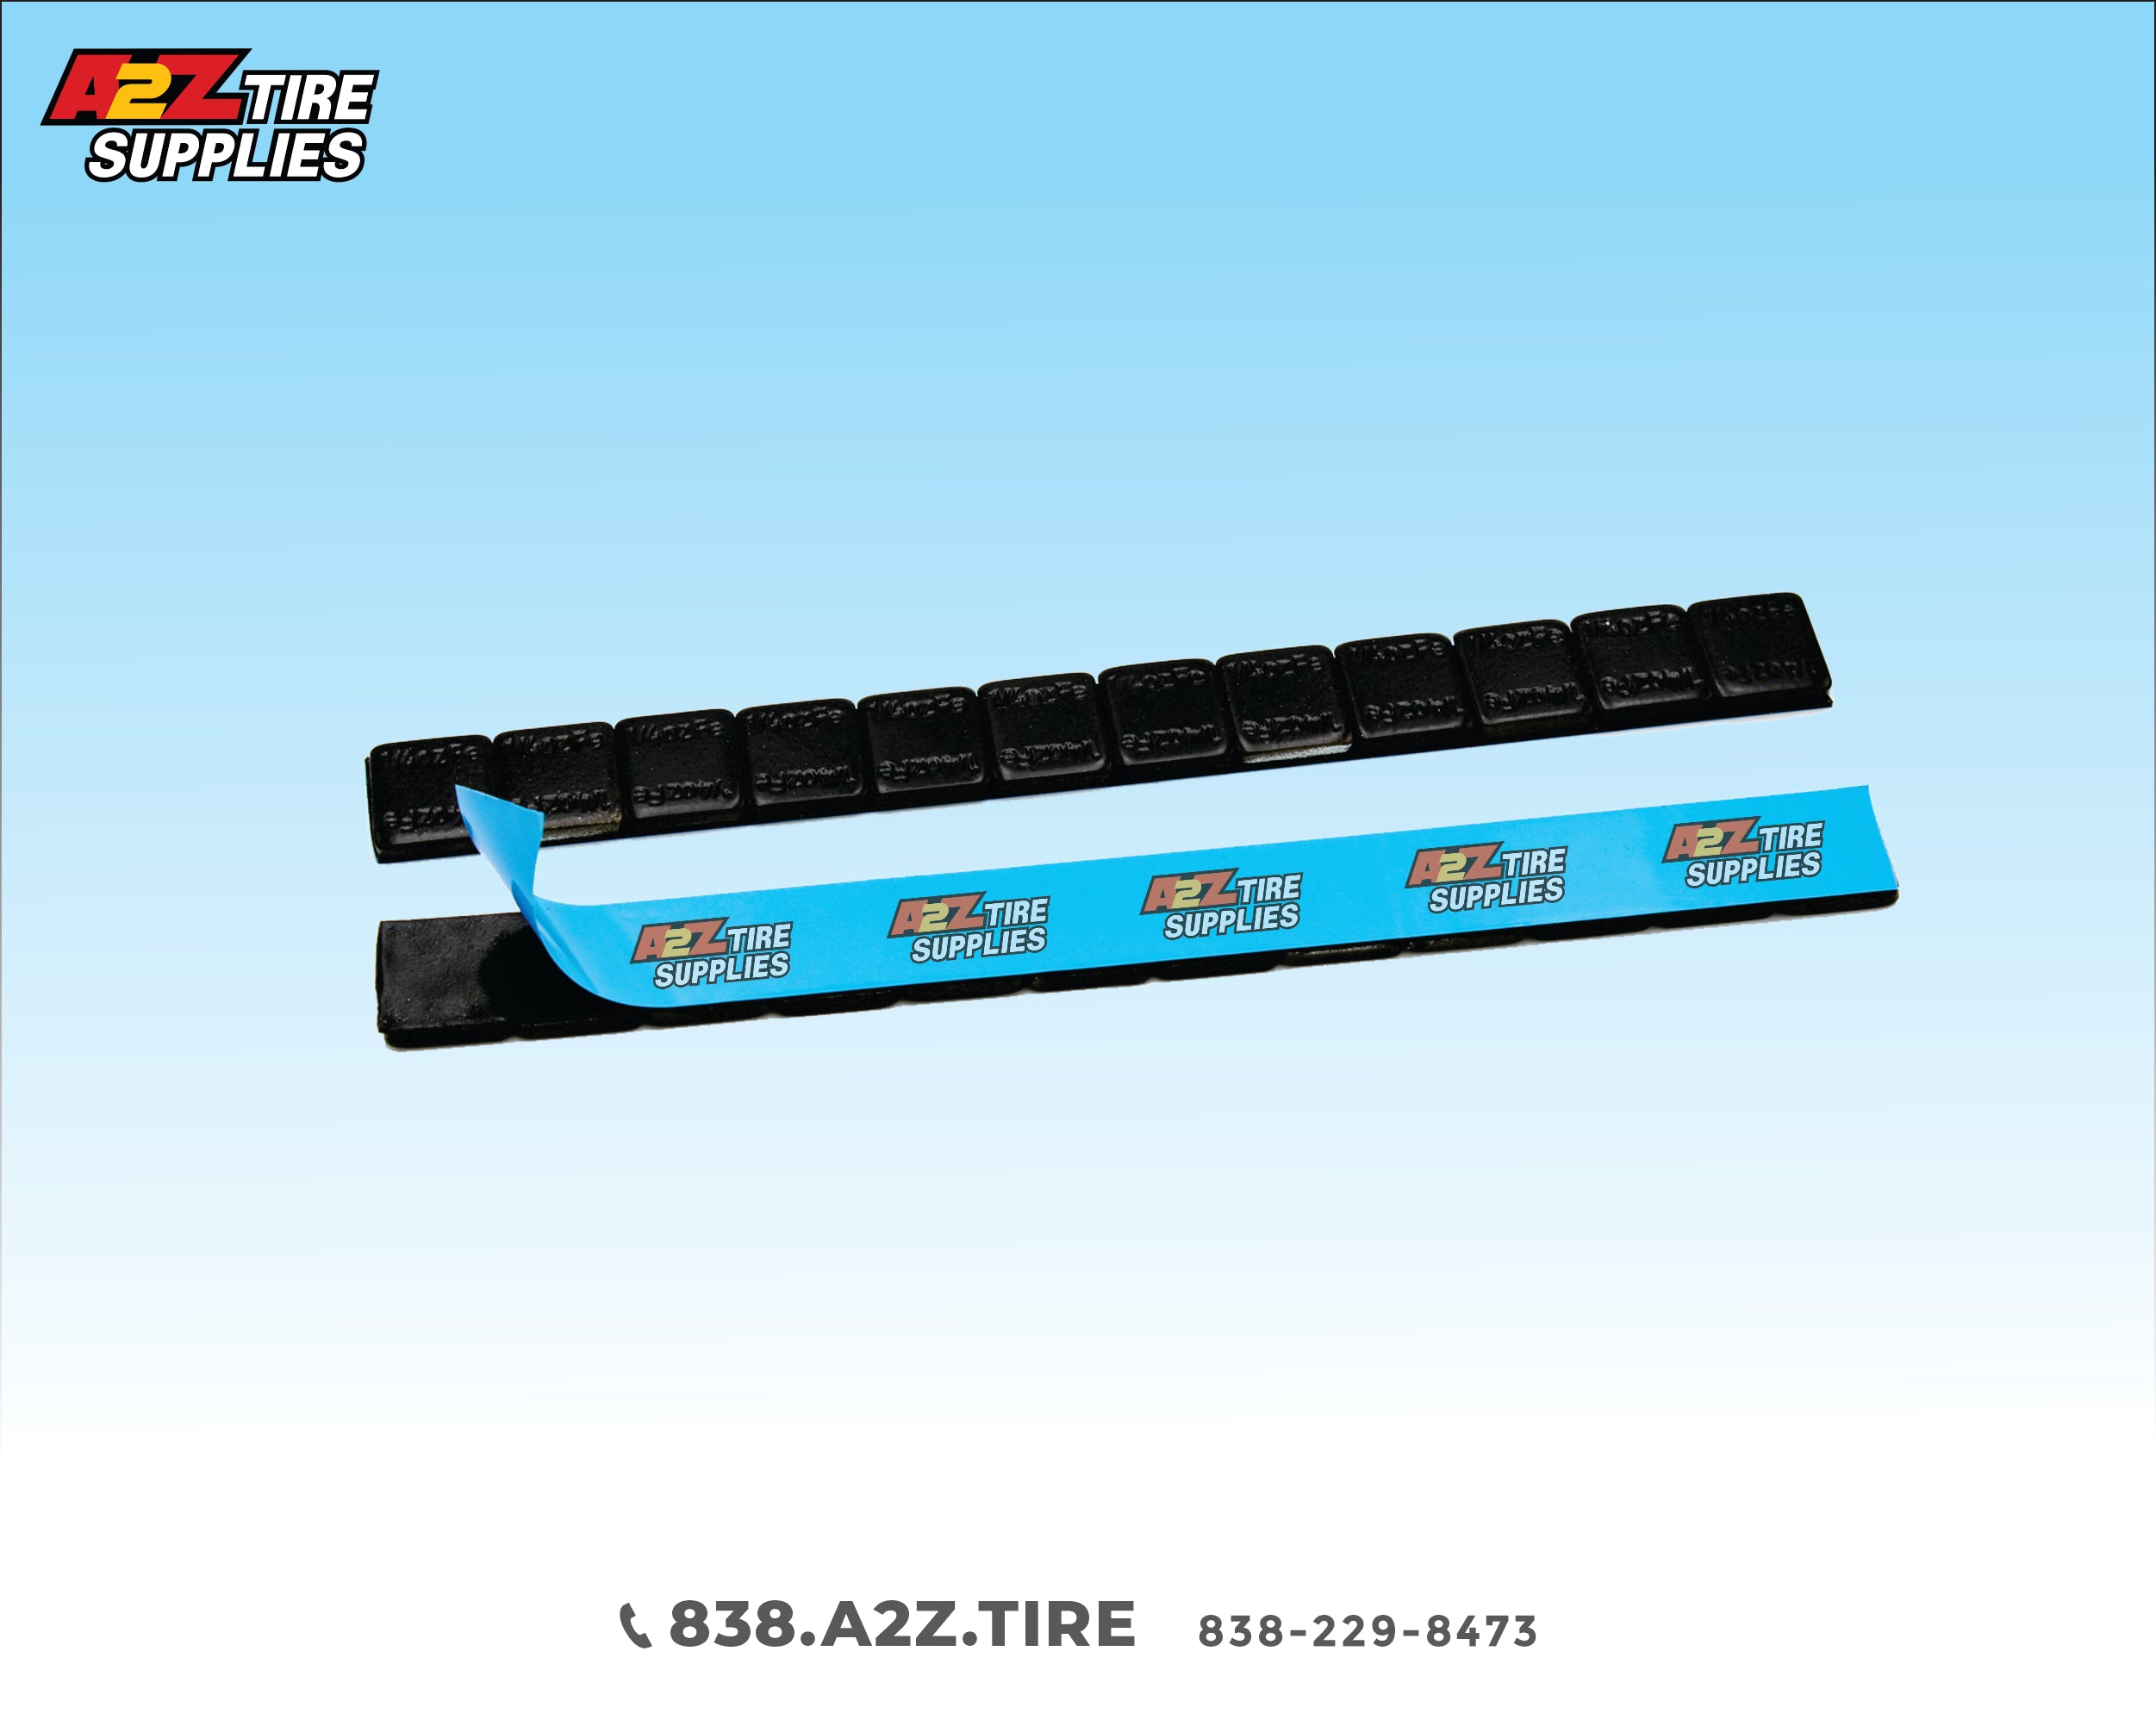 FE Low Profile Adhesive Wheel Weights 1/4 Oz Segments Blue Tape (600 Pcs)